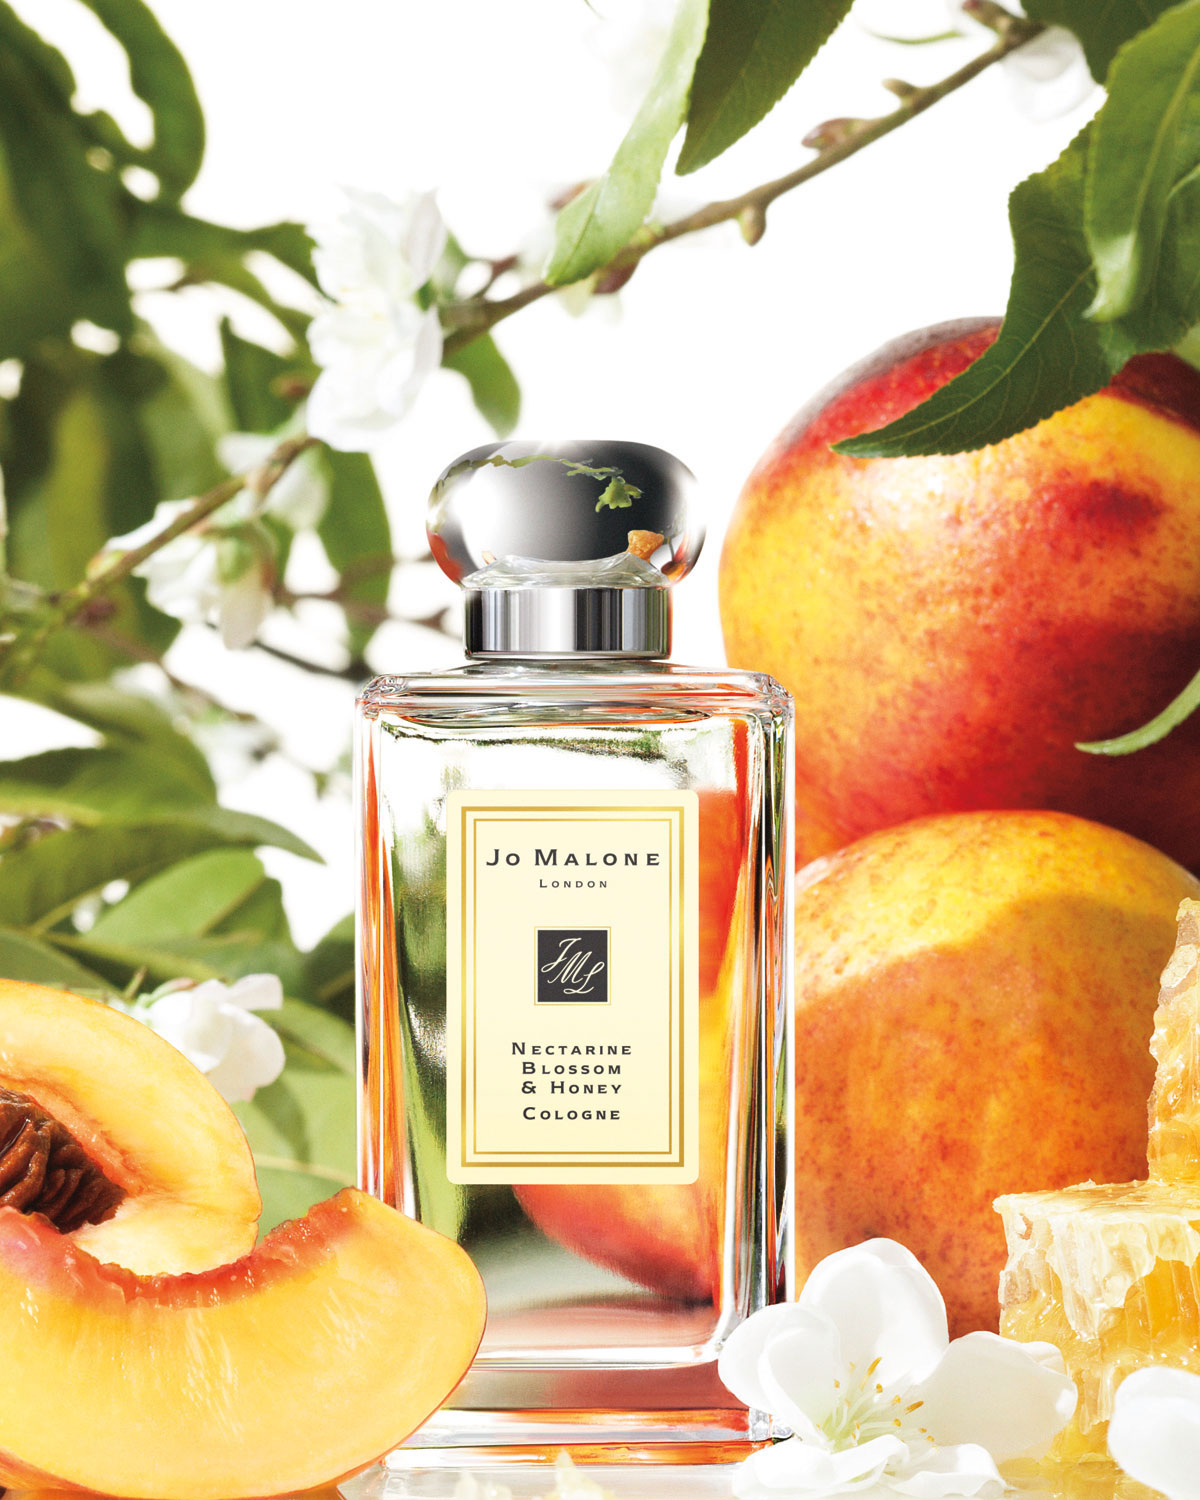 Jo Malone Nectarine Blossom & Honey fruity perfume guide to scents